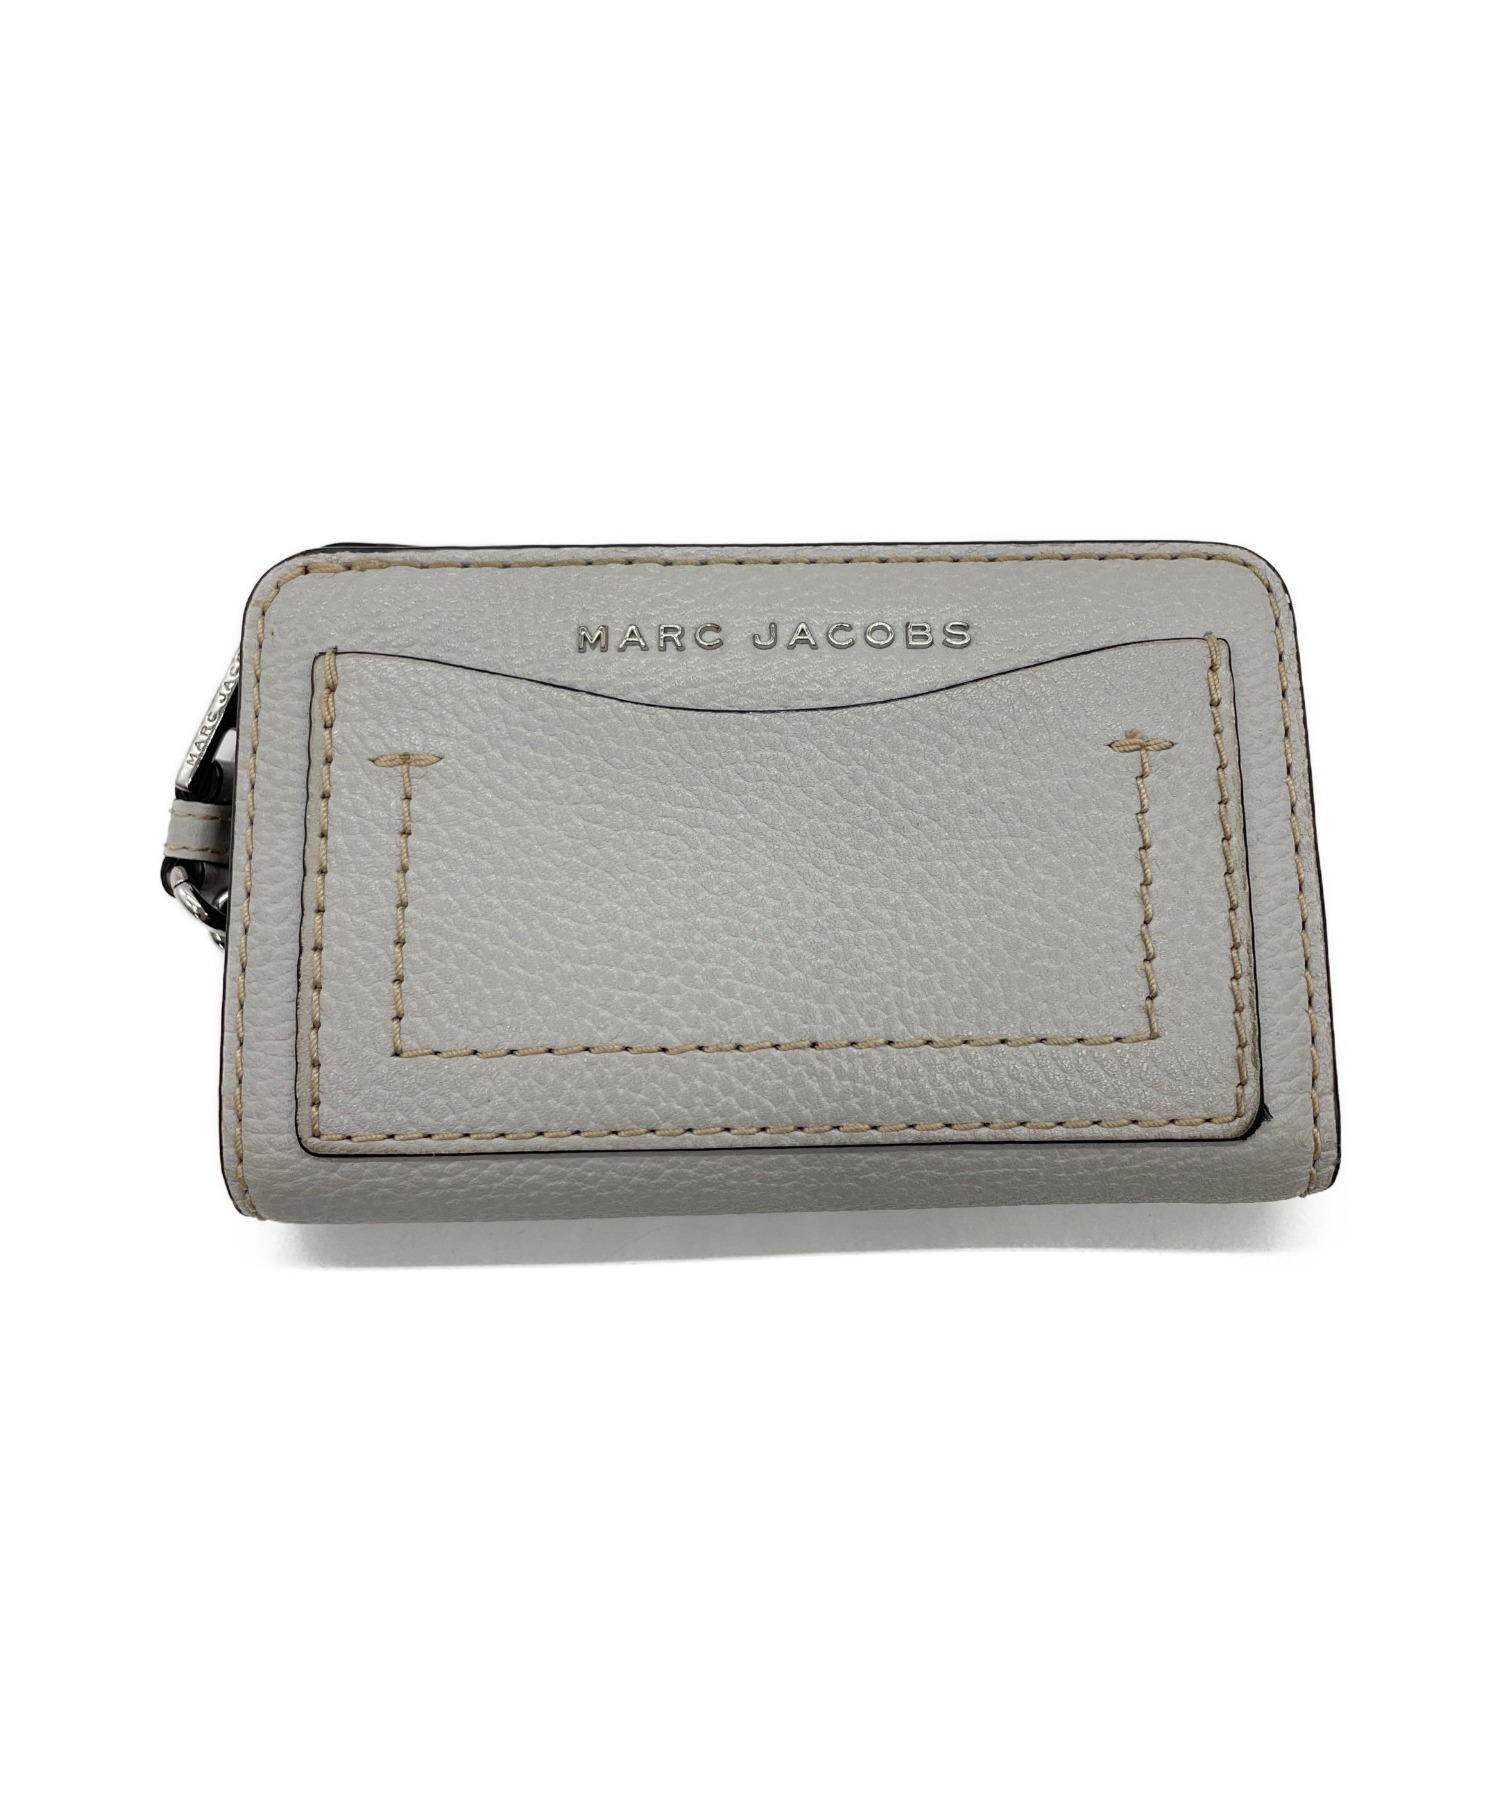 MARC JACOBS (マークジェイコブス) 2つ折り財布 グレー M0014521